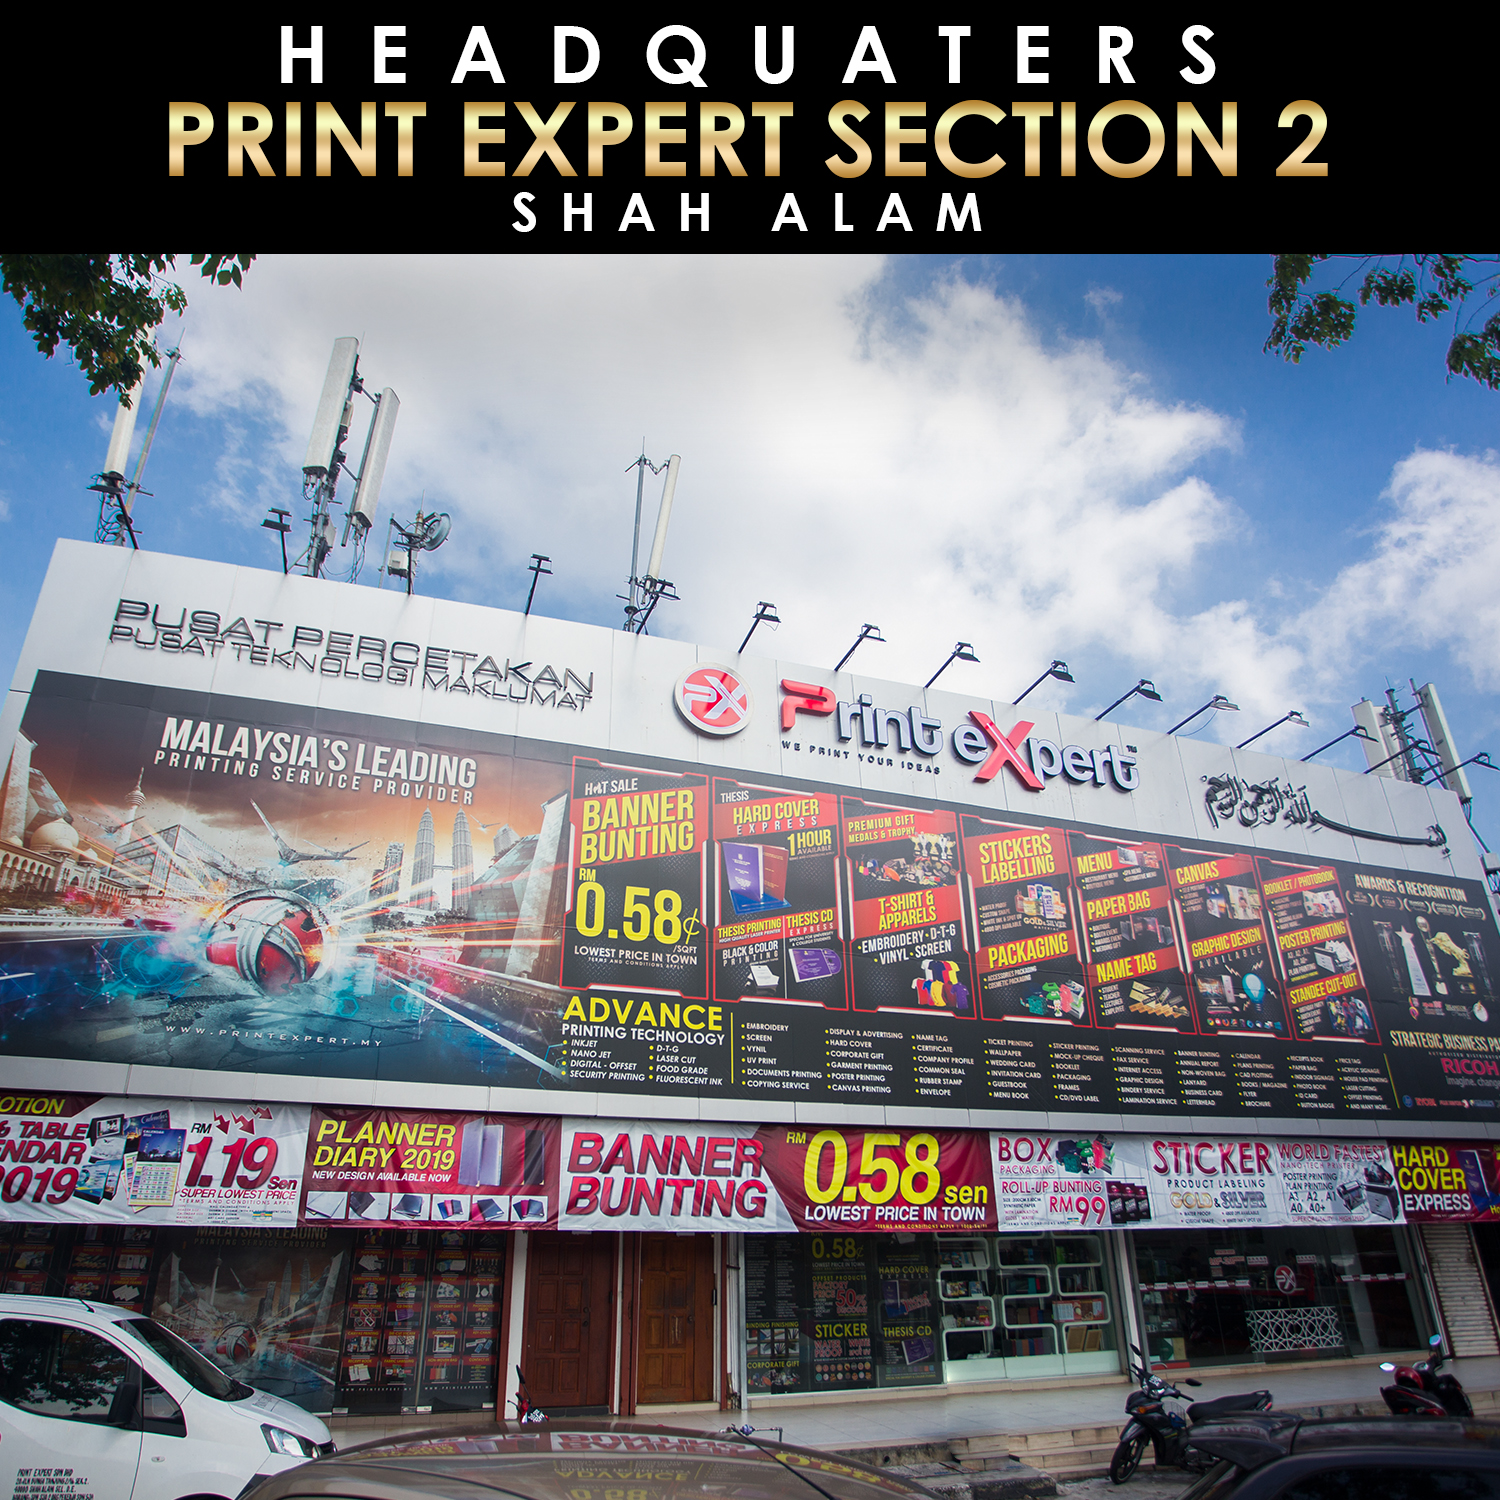 Kedai Sticker Shah Alam  Pvc Counter Sampling Booth Kedai Printing